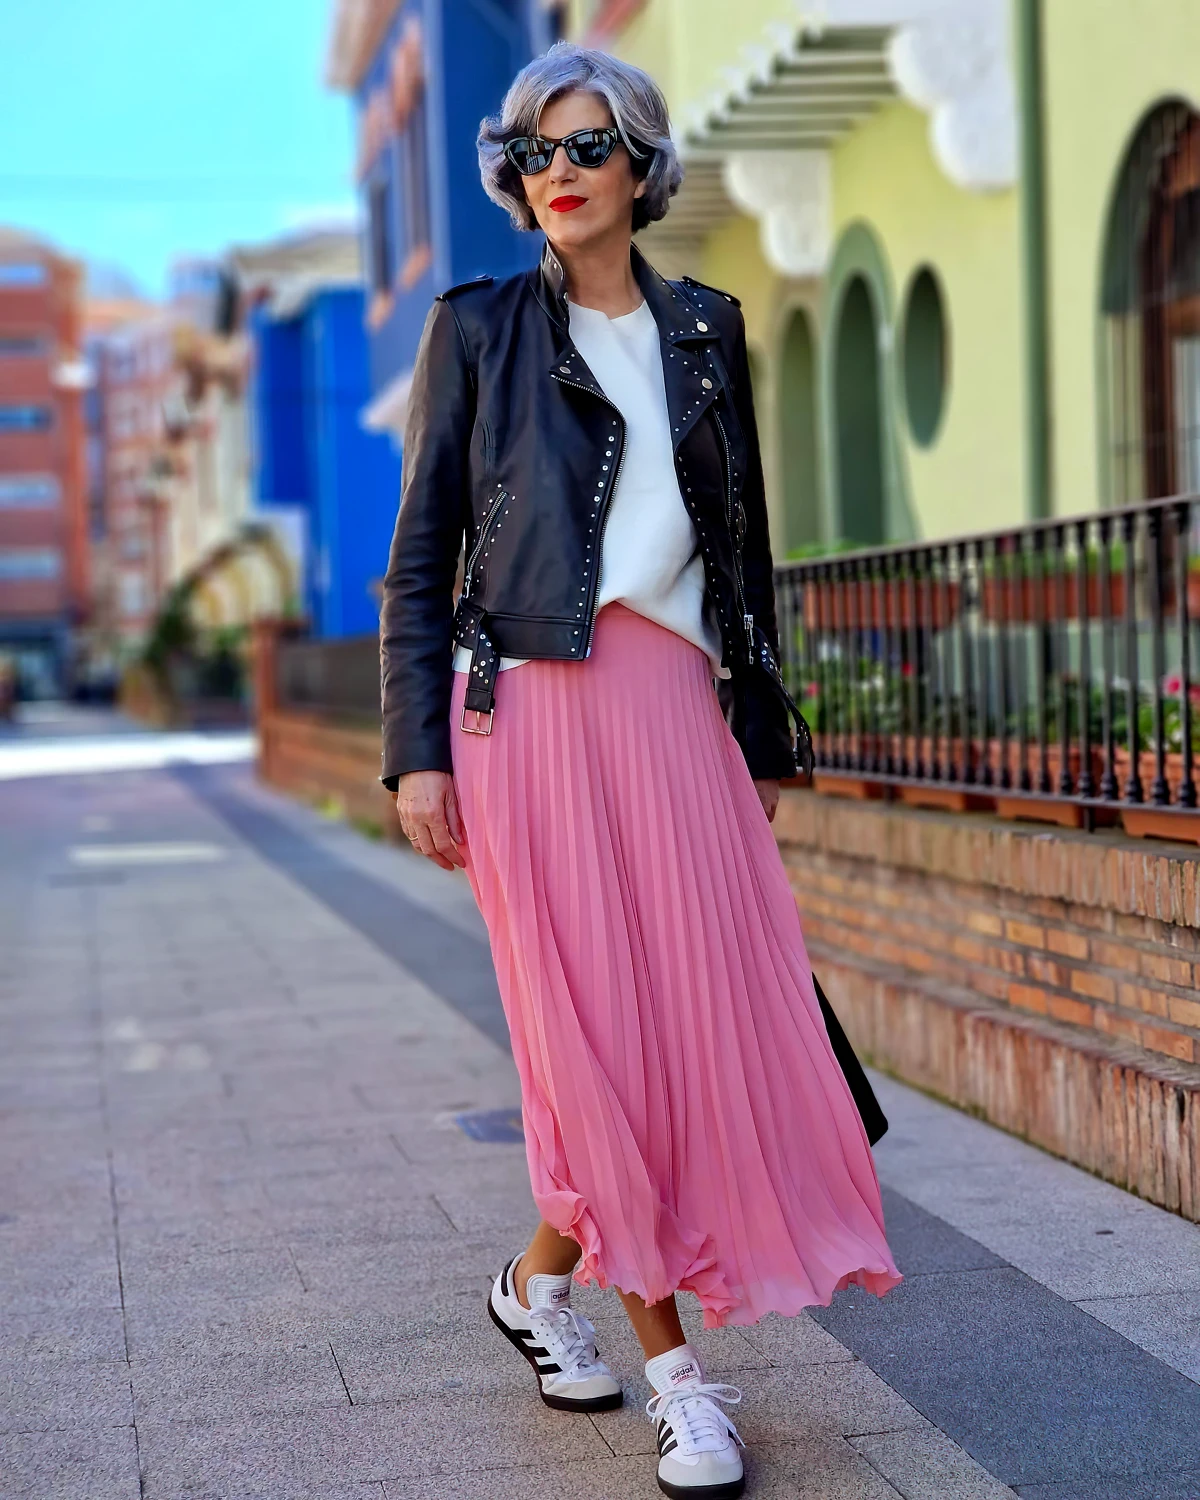 mode femme 50 ans jupe longue plissee rose veste en cuir